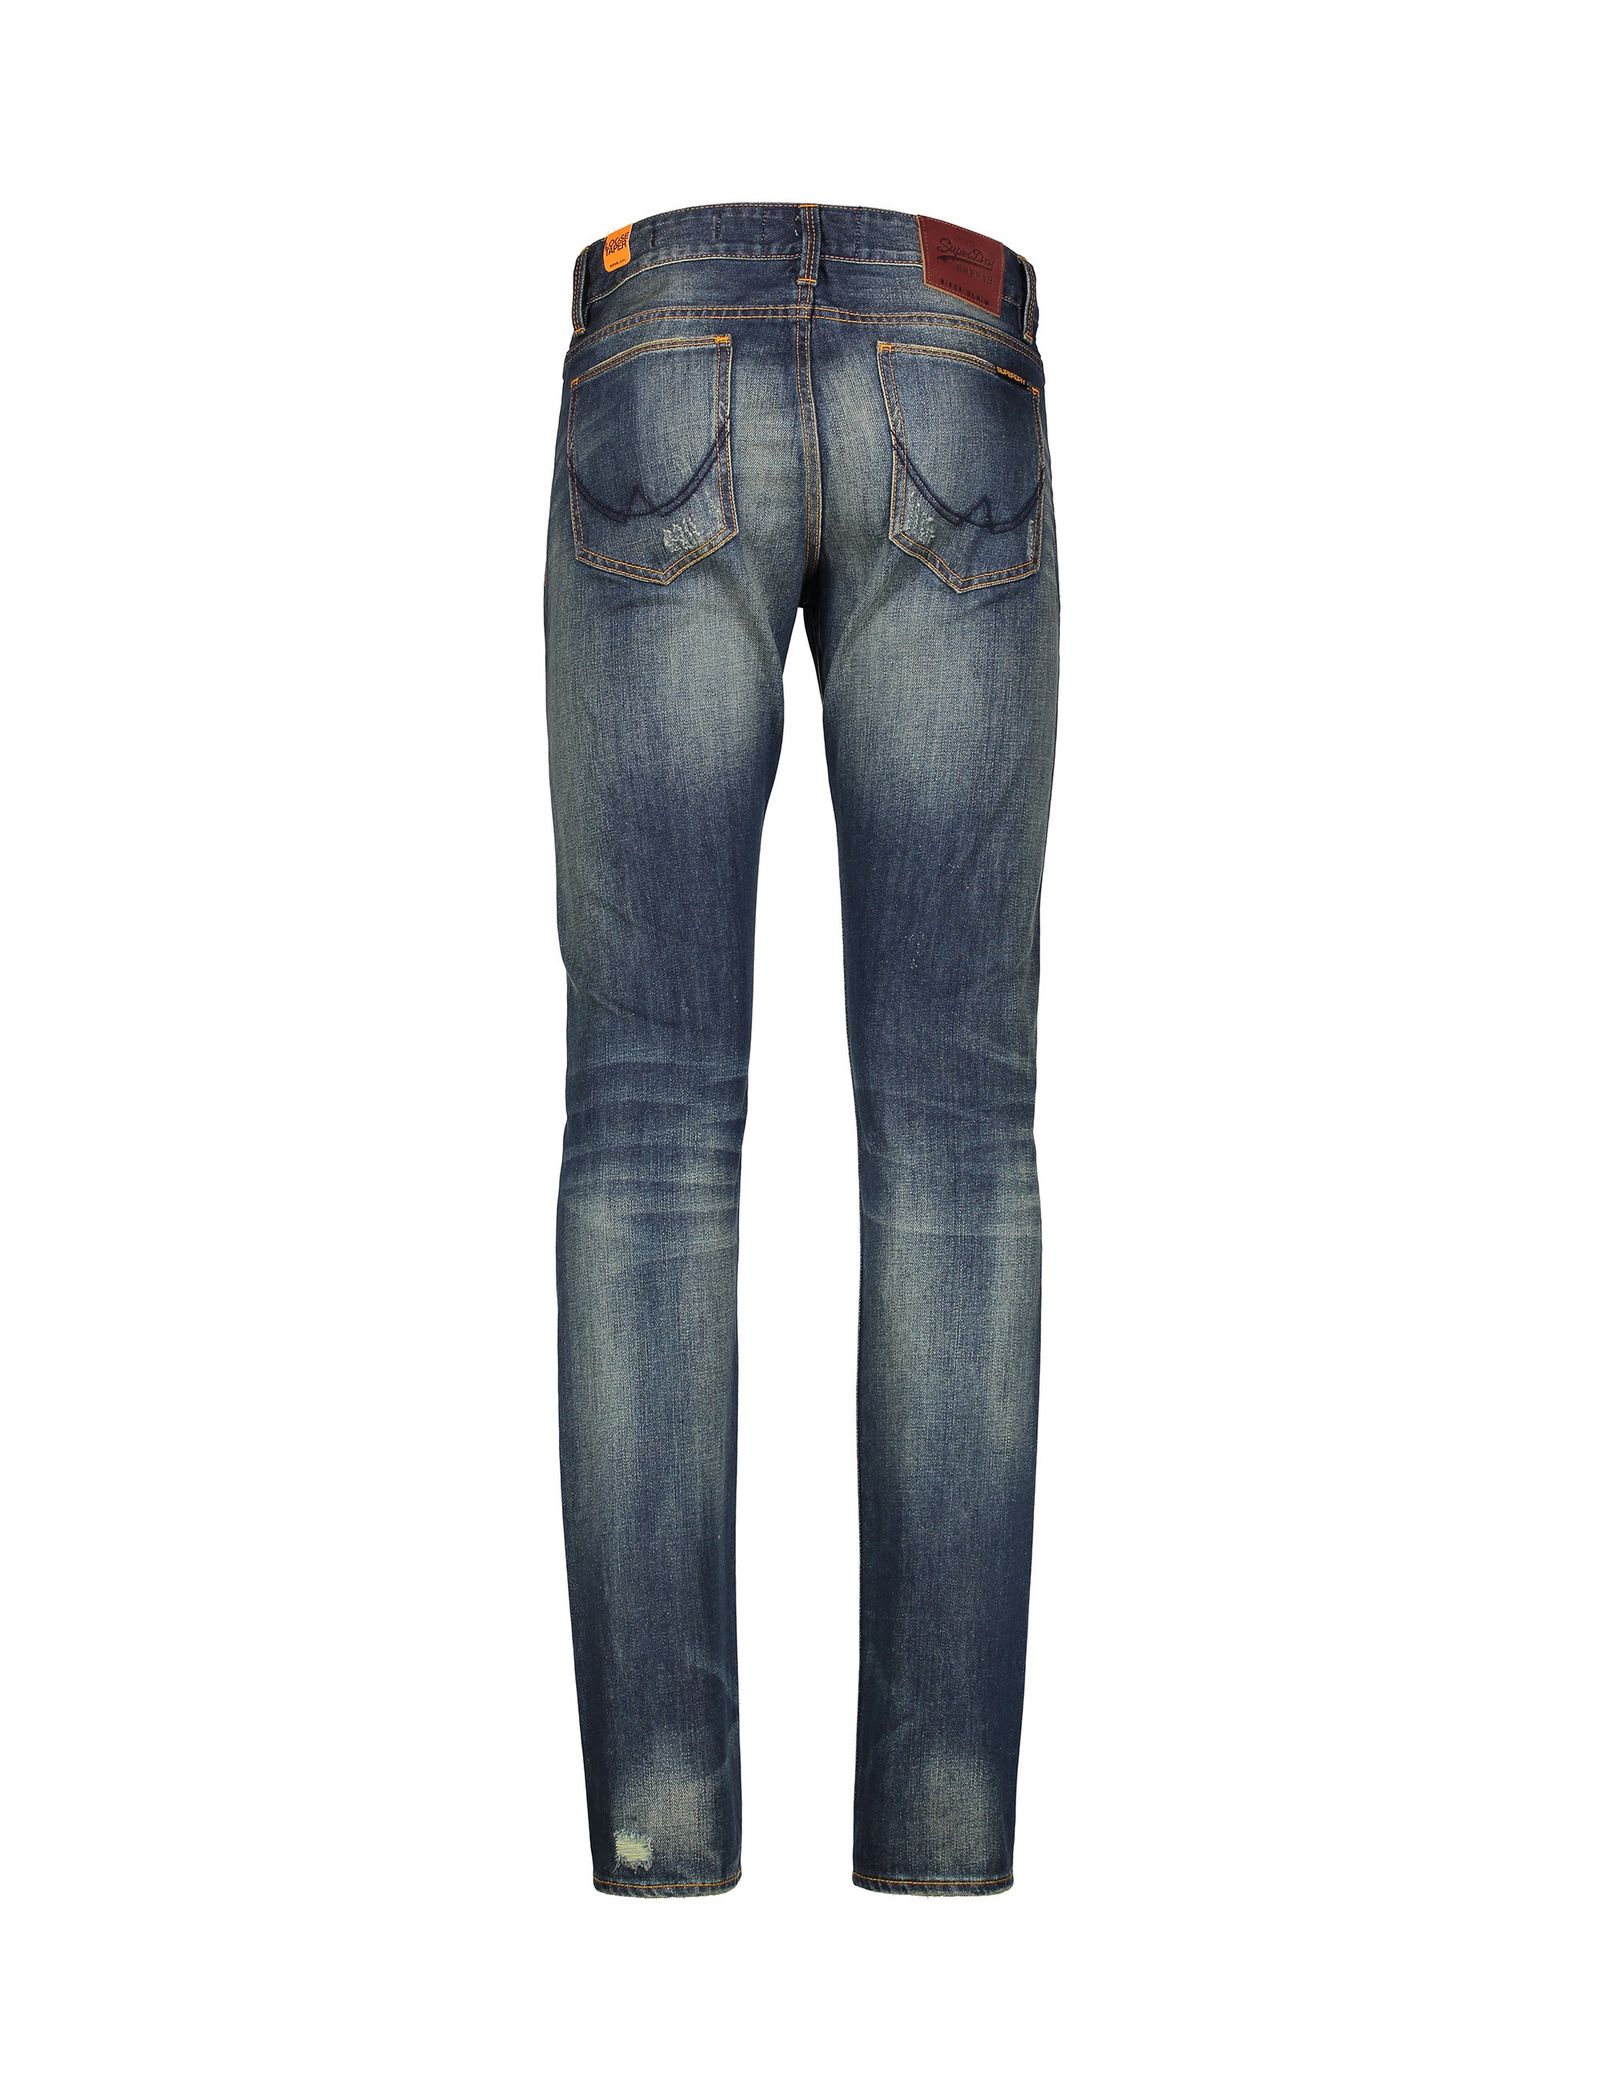 شلوار جین خمره ای مردانه Biker Tapered Jeans - سوپردرای - آبي تيره - 3